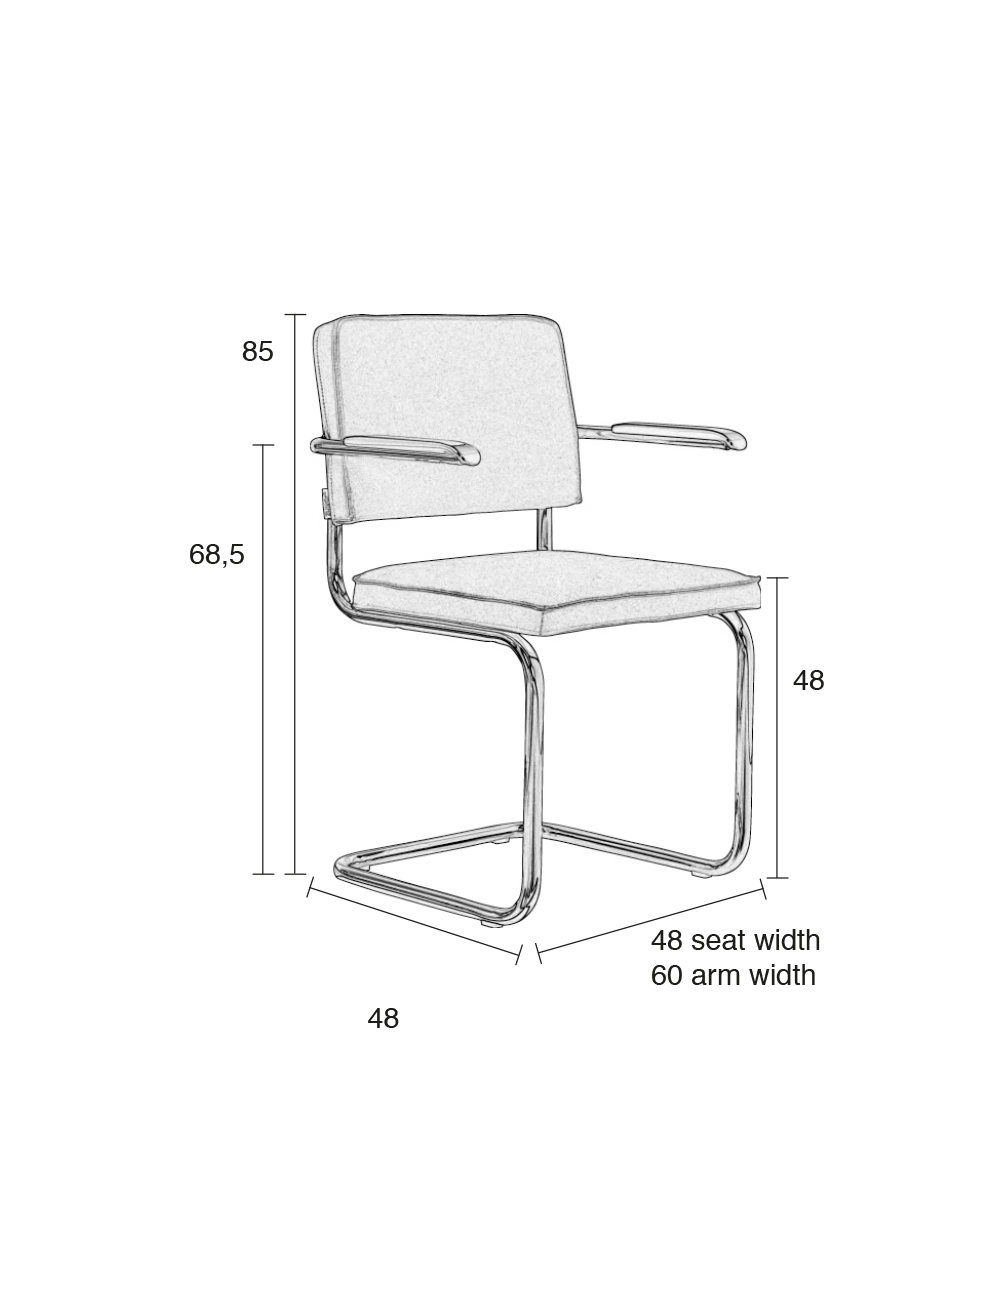 https://www.fundesign.nl/media/catalog/product/r/i/ridge-vintage-armchair-size_8.jpg